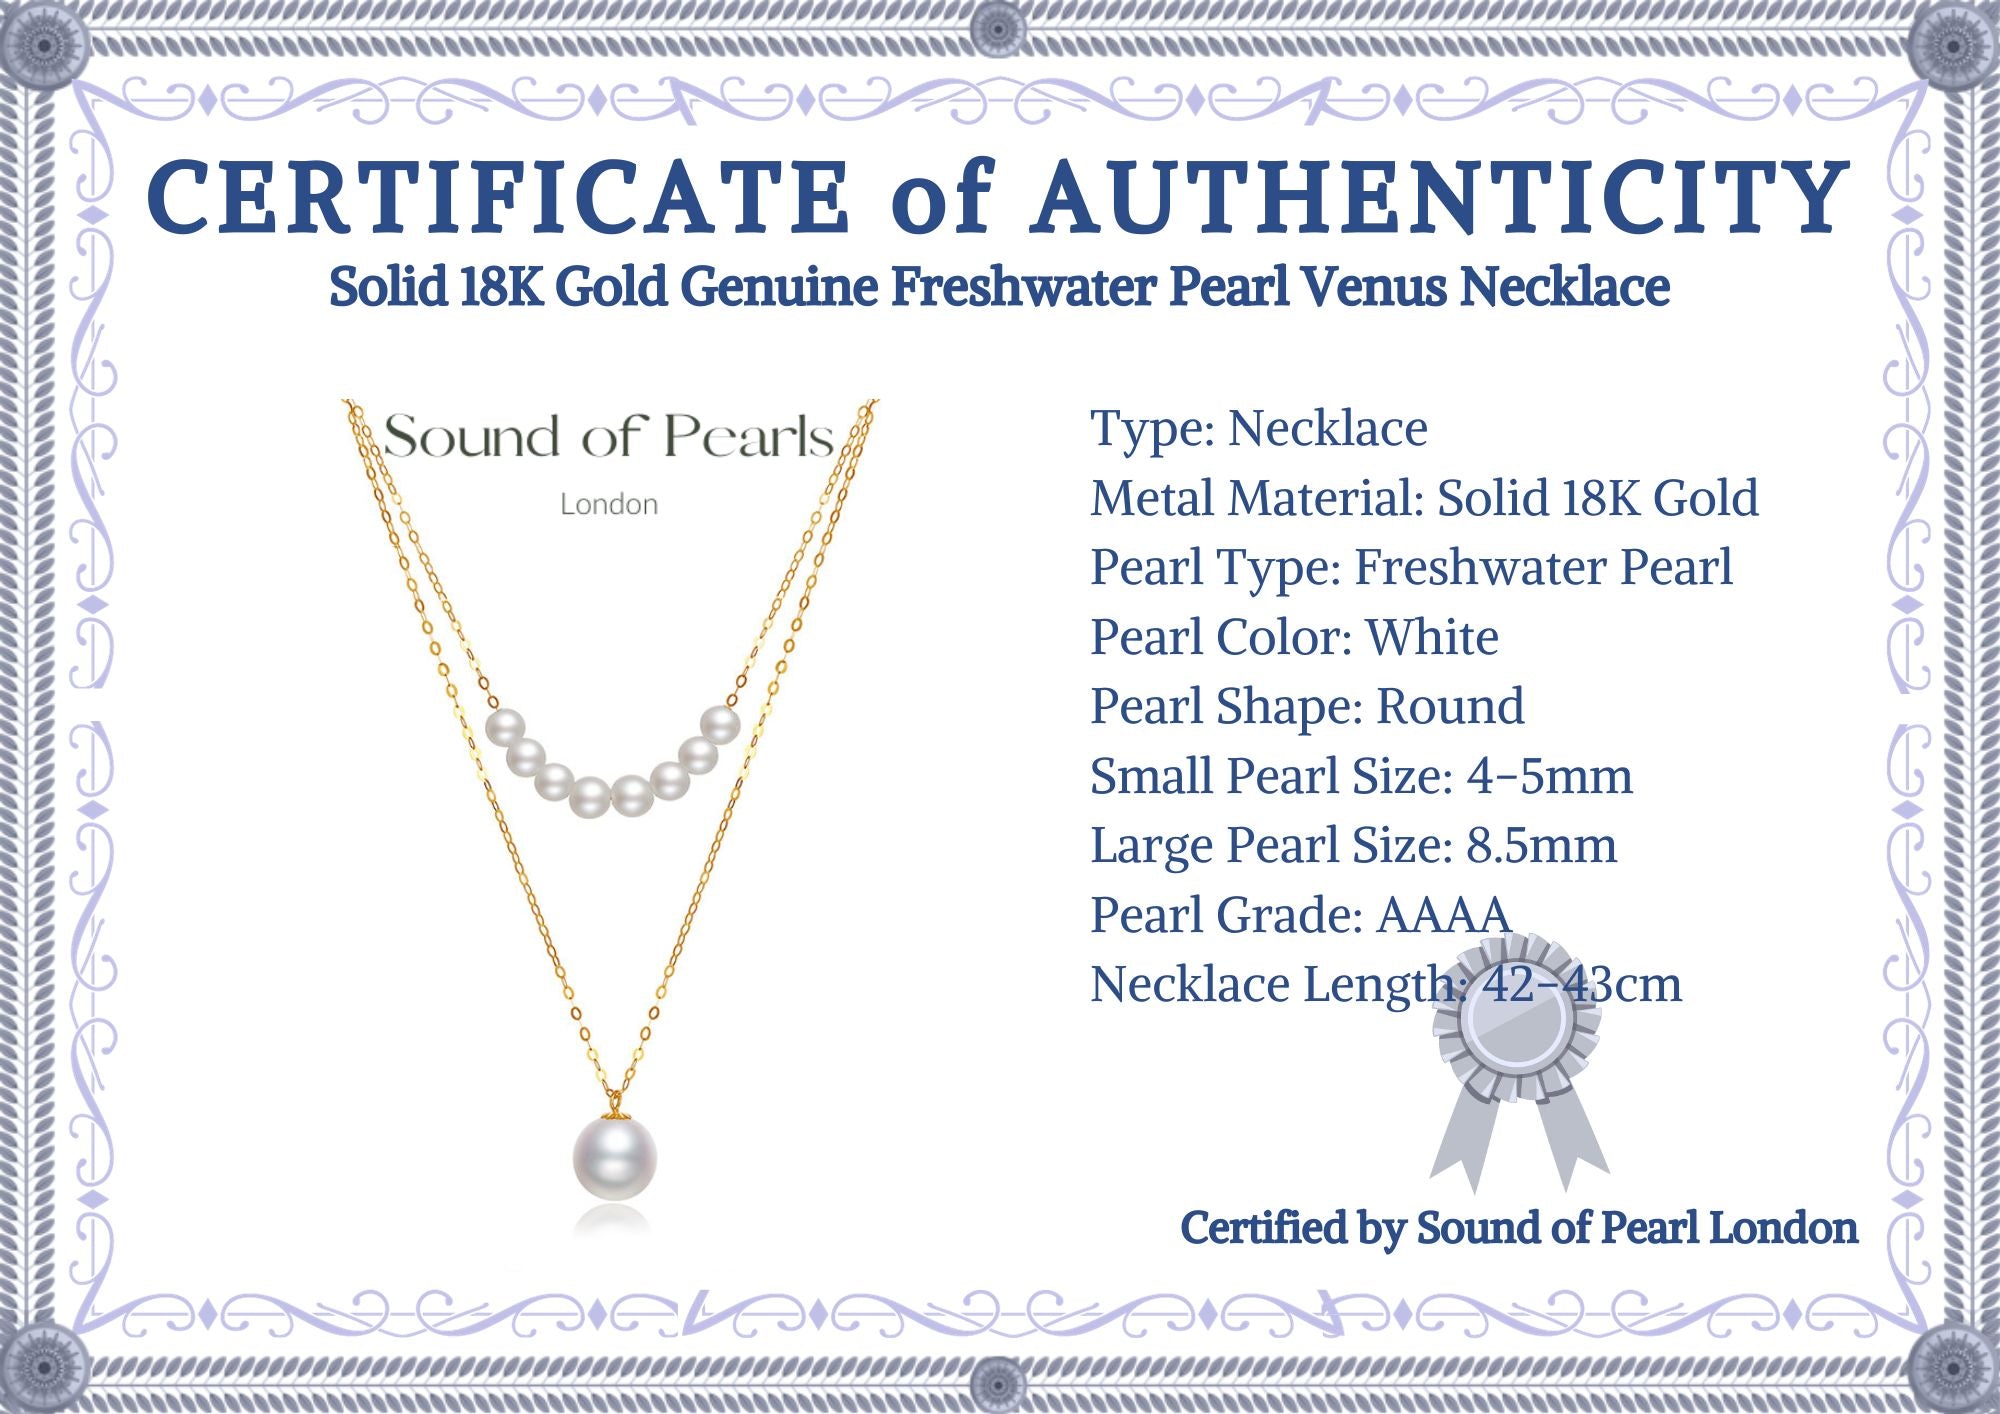 Solid 18K Gold Genuine Freshwater Pearl Venus Necklace